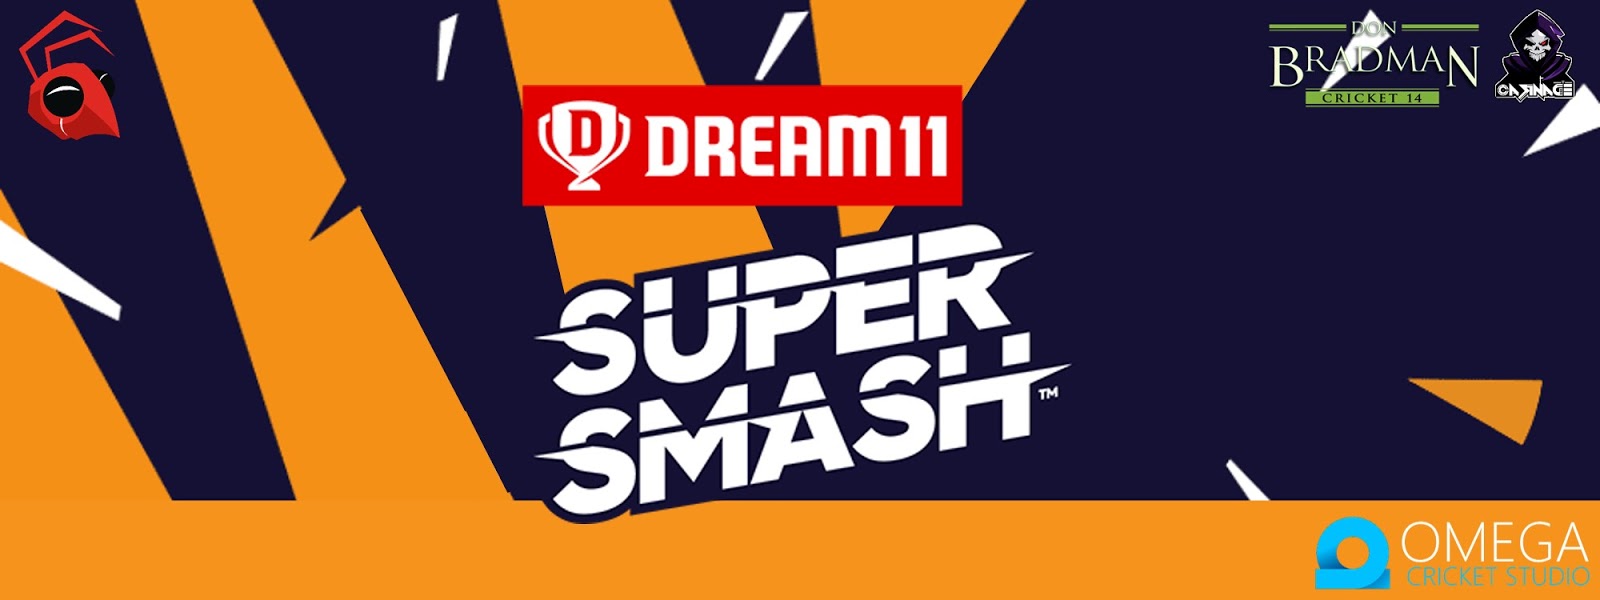 Super Smash 2020 Patch for Don Bradman Cricket 14